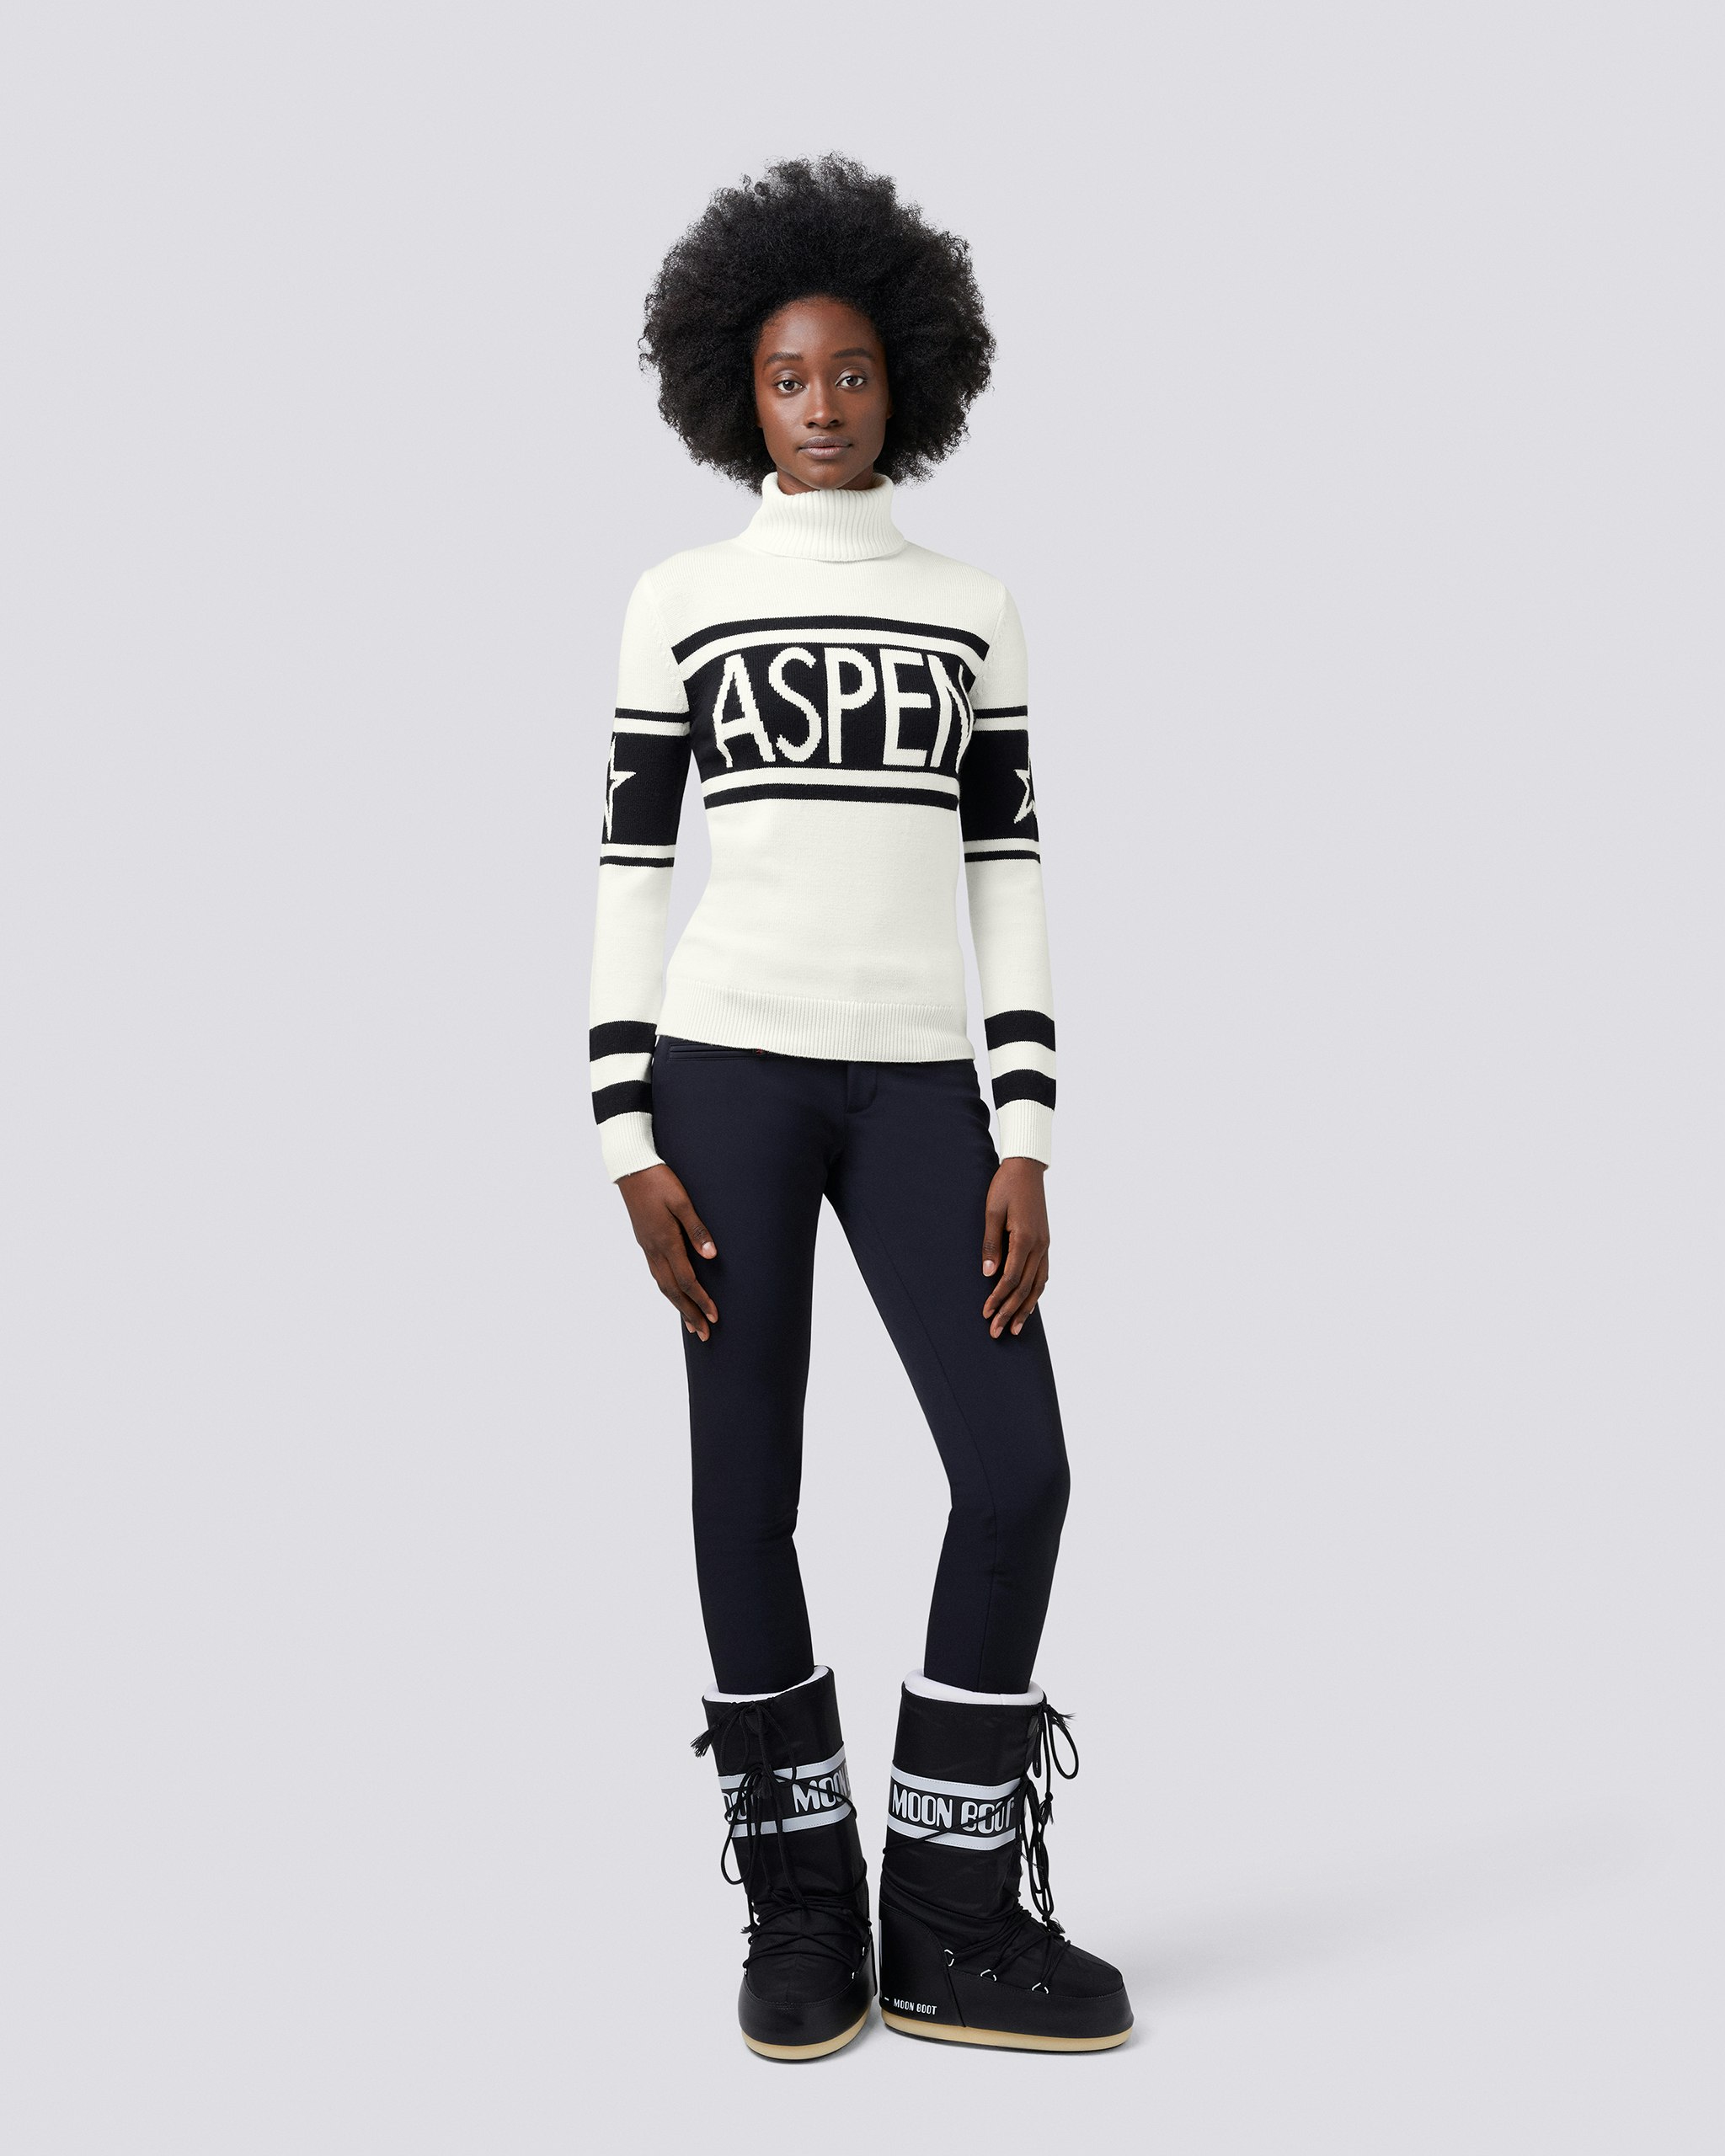 Schild Sweater Aspen